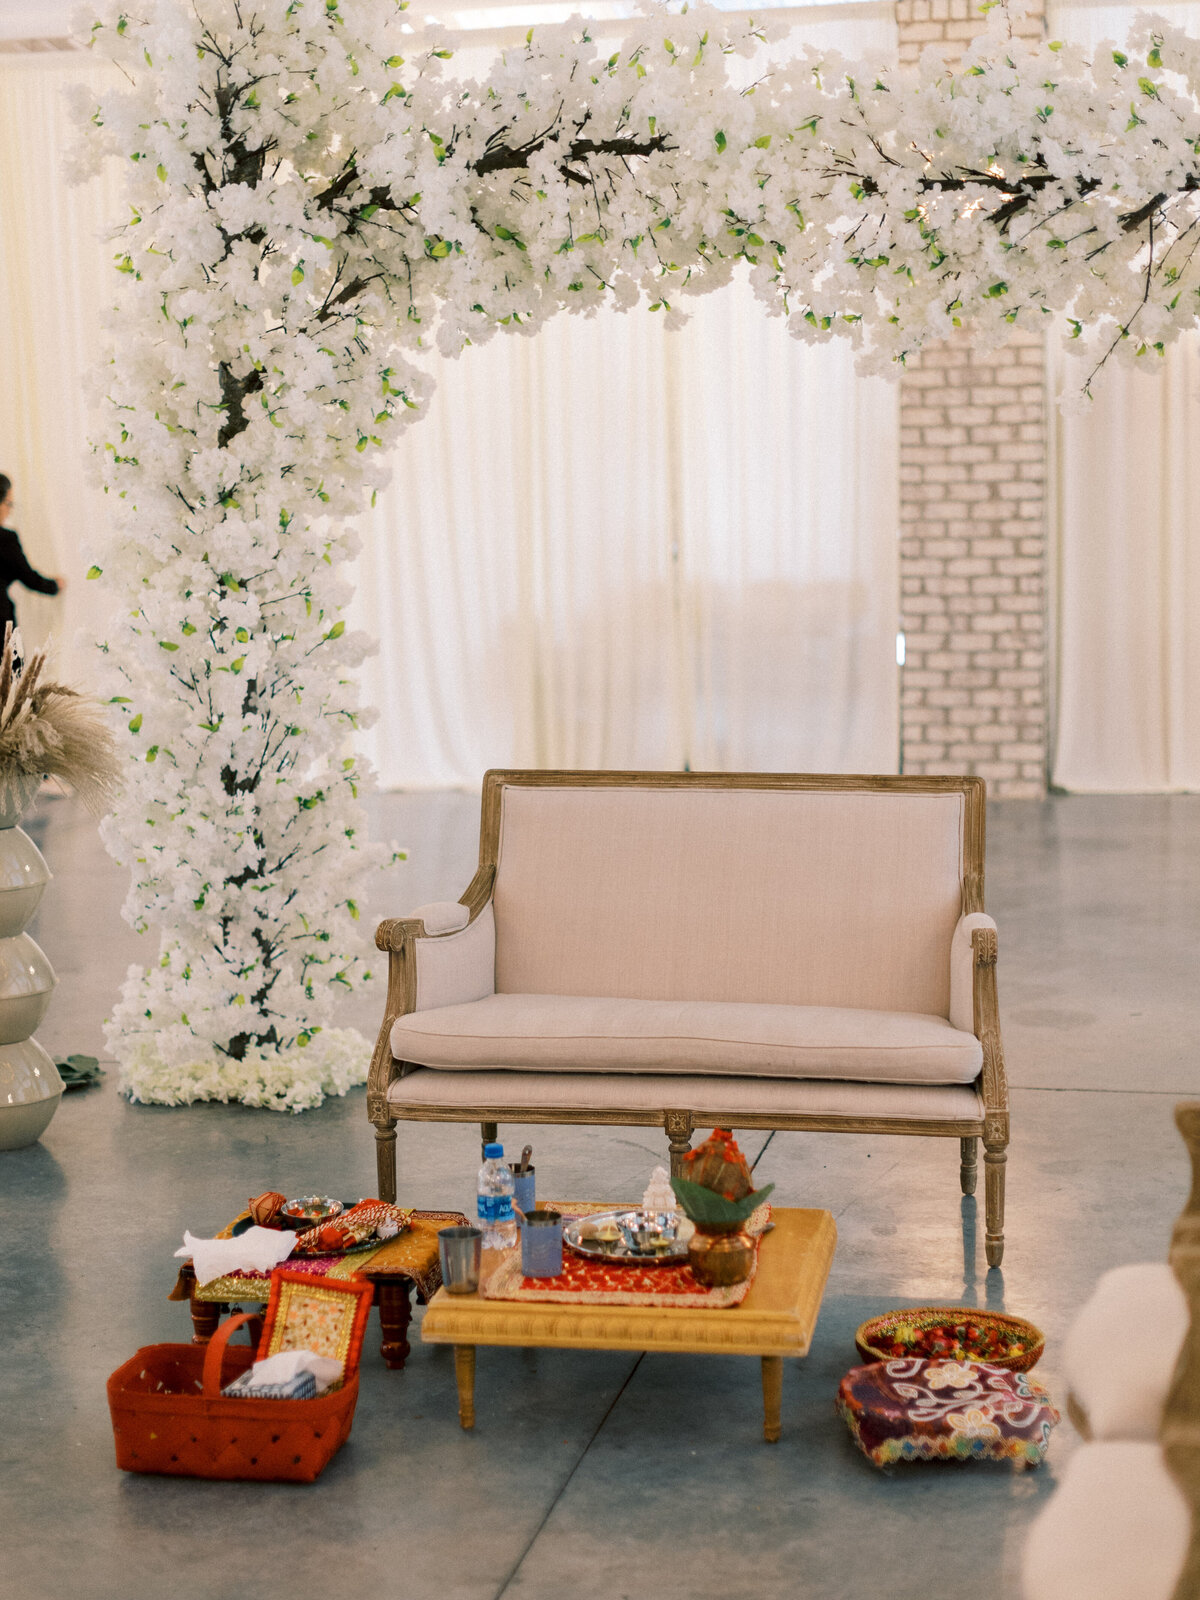 Prianka + Alex - Hindu Wedding 4 - Ceremony Mandap design details